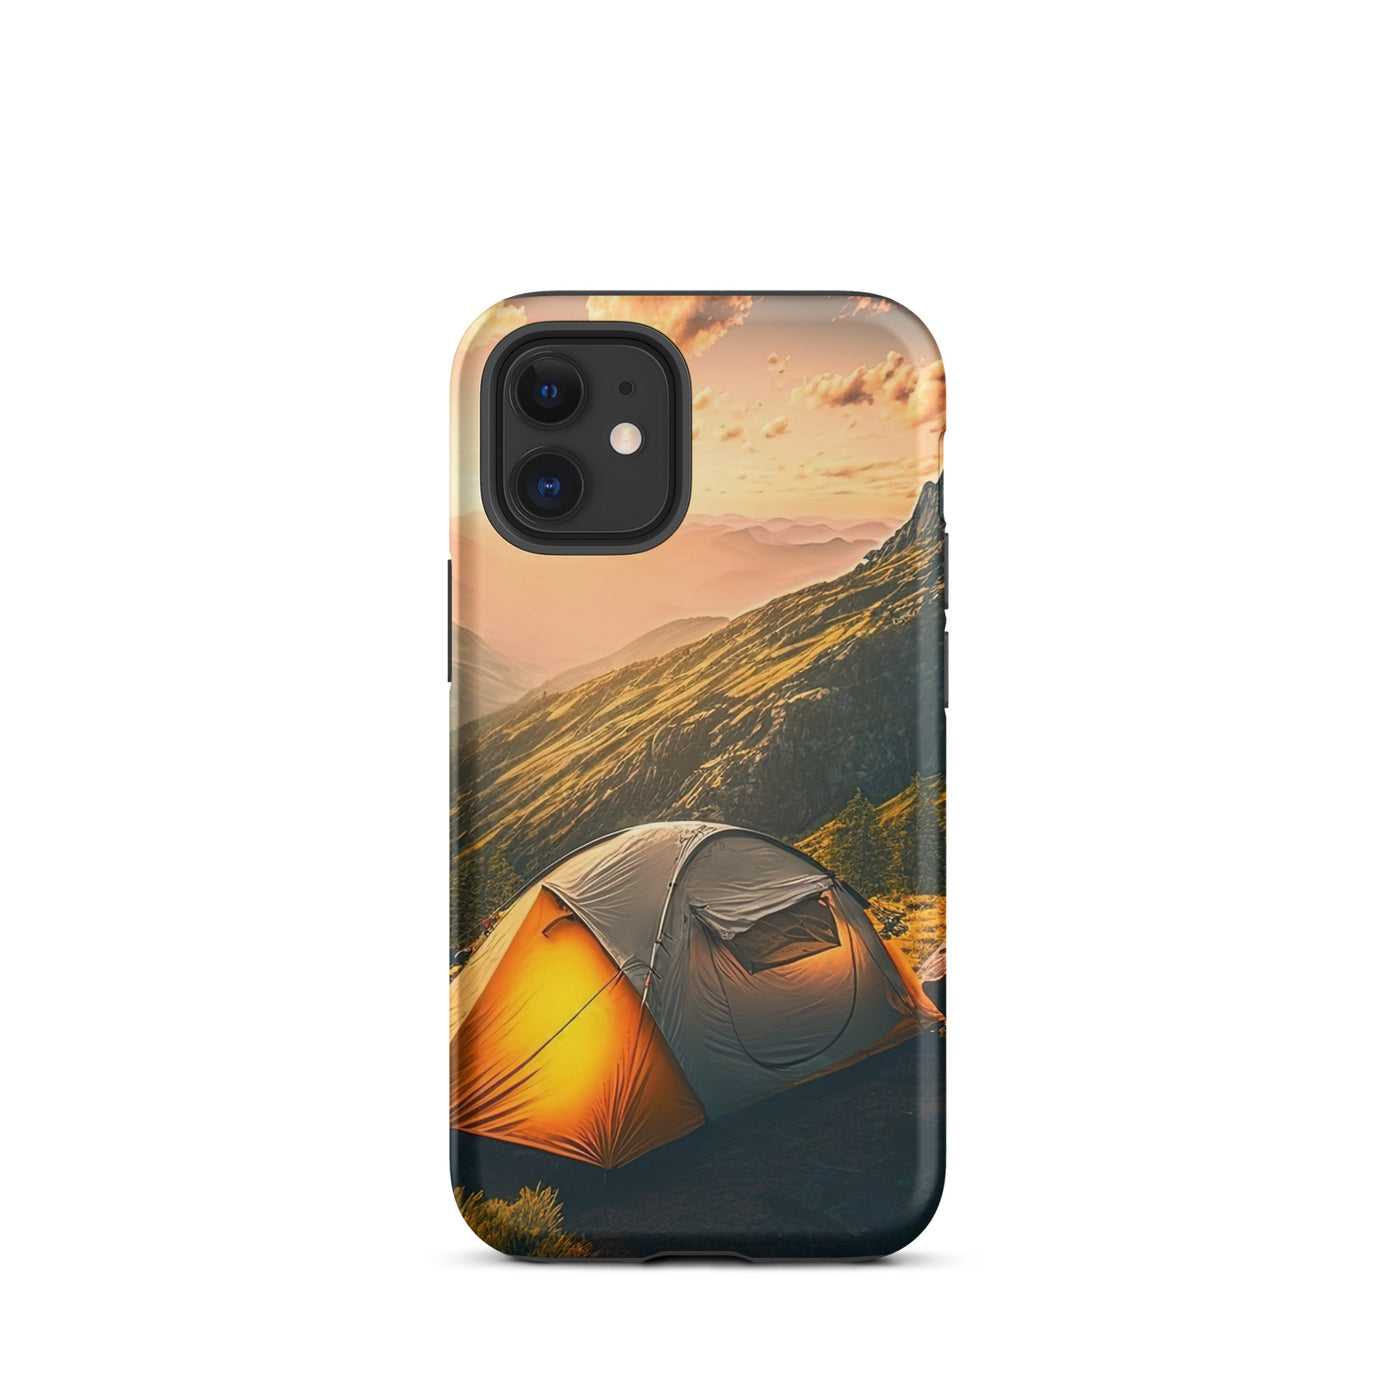 Zelt auf Berg im Sonnenaufgang - Landschafts - iPhone Schutzhülle (robust) camping xxx iPhone 12 mini